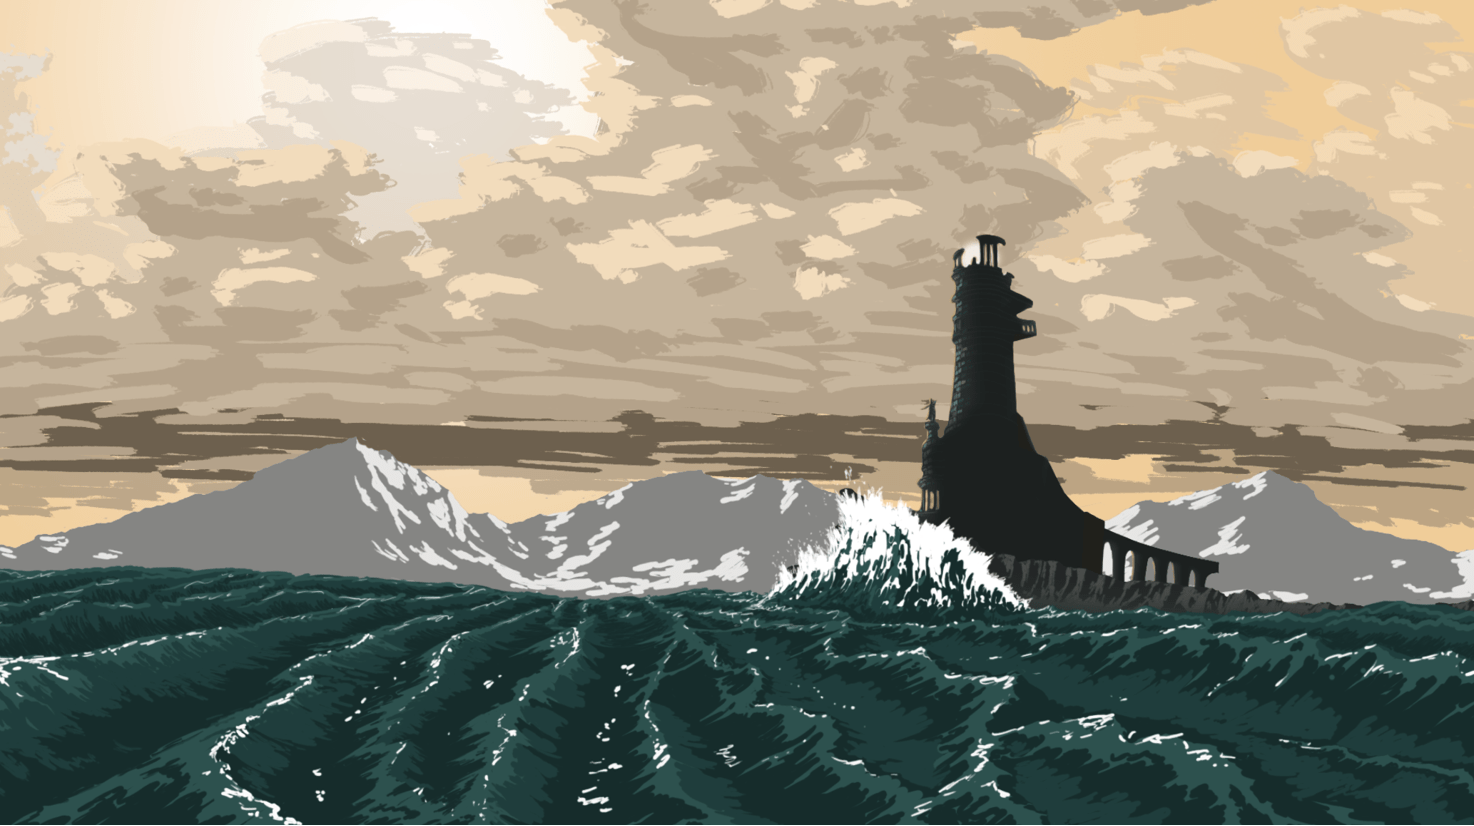 Lighthouse on dusky horizon